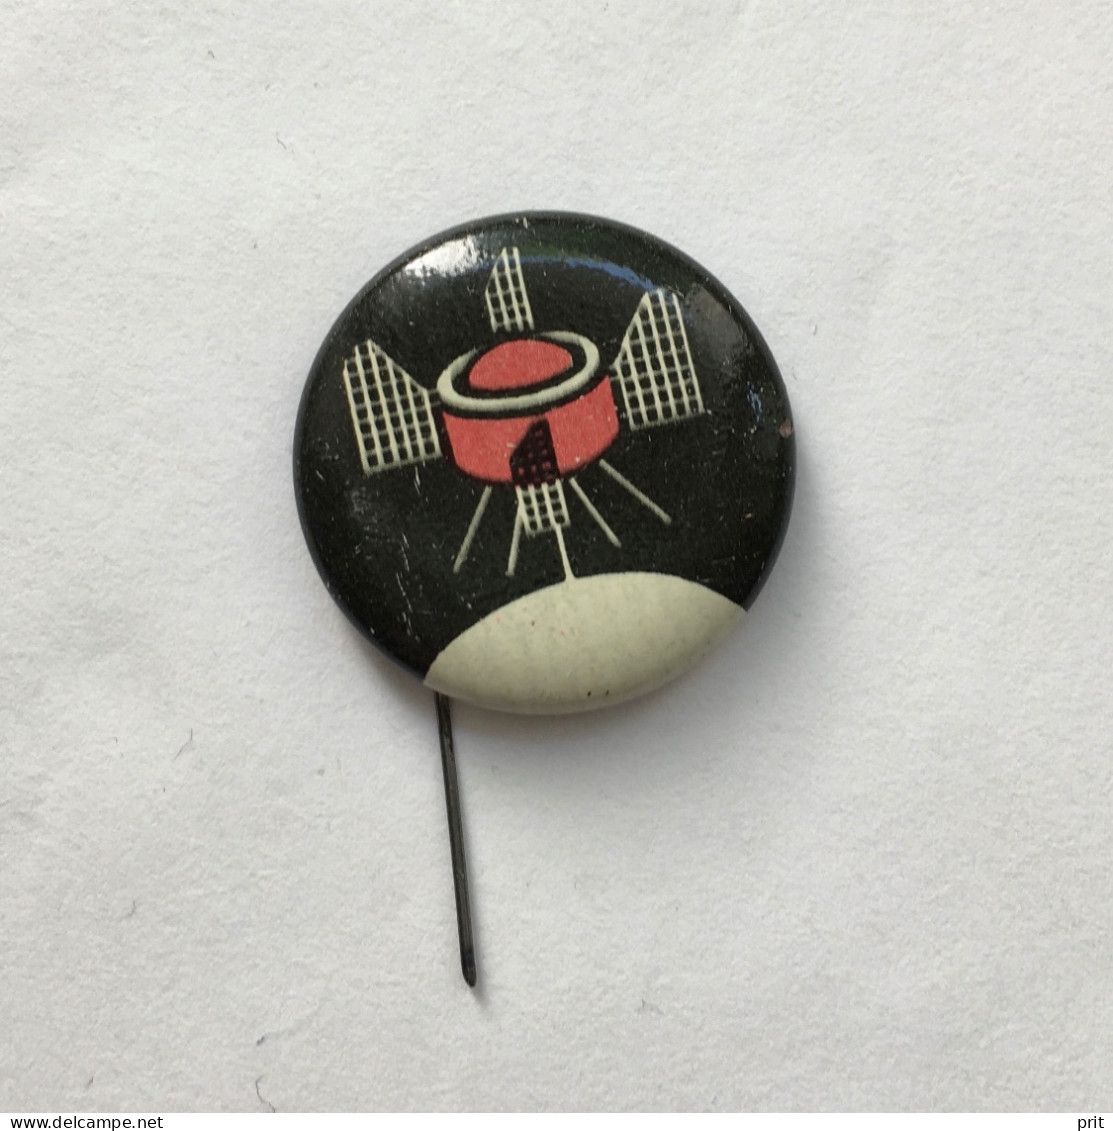 Sputnik Space Cosmos Spaceship Programe Soviet Russia USSR 1960s Vintage Pin Badge Metal - Spazio